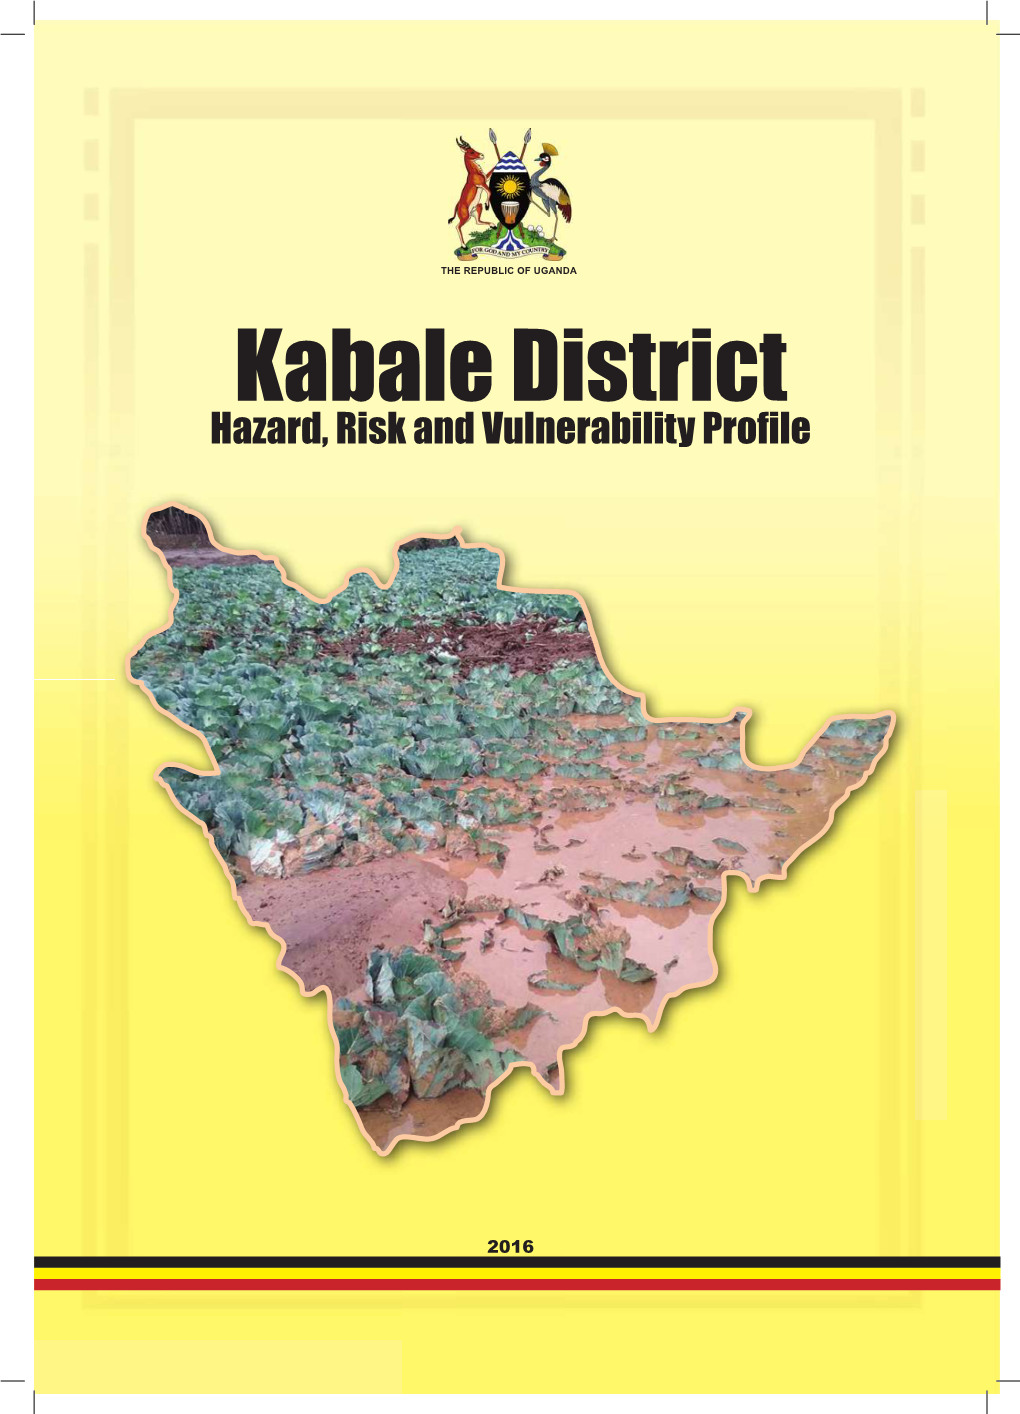 Kabale District HRV Profile.Pdf